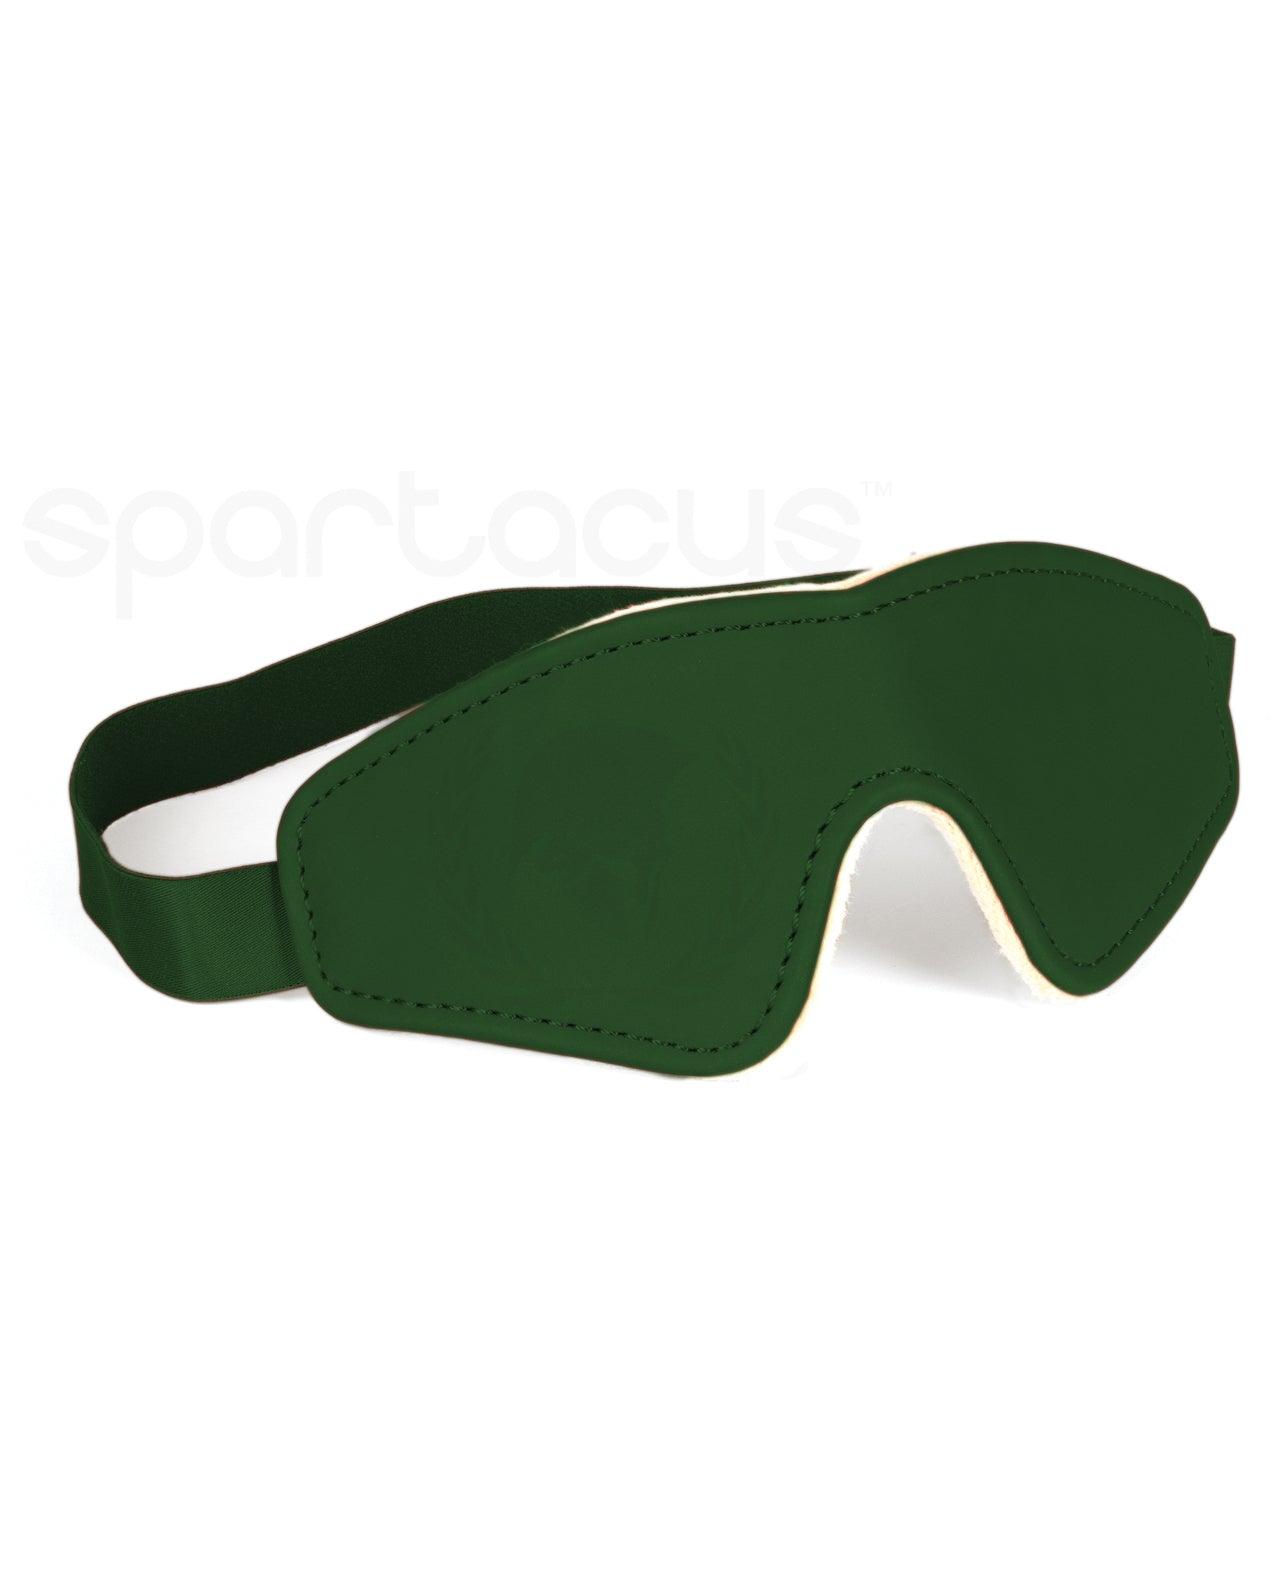 Spartacus PU Blindfold w/Plush Lining - Green -